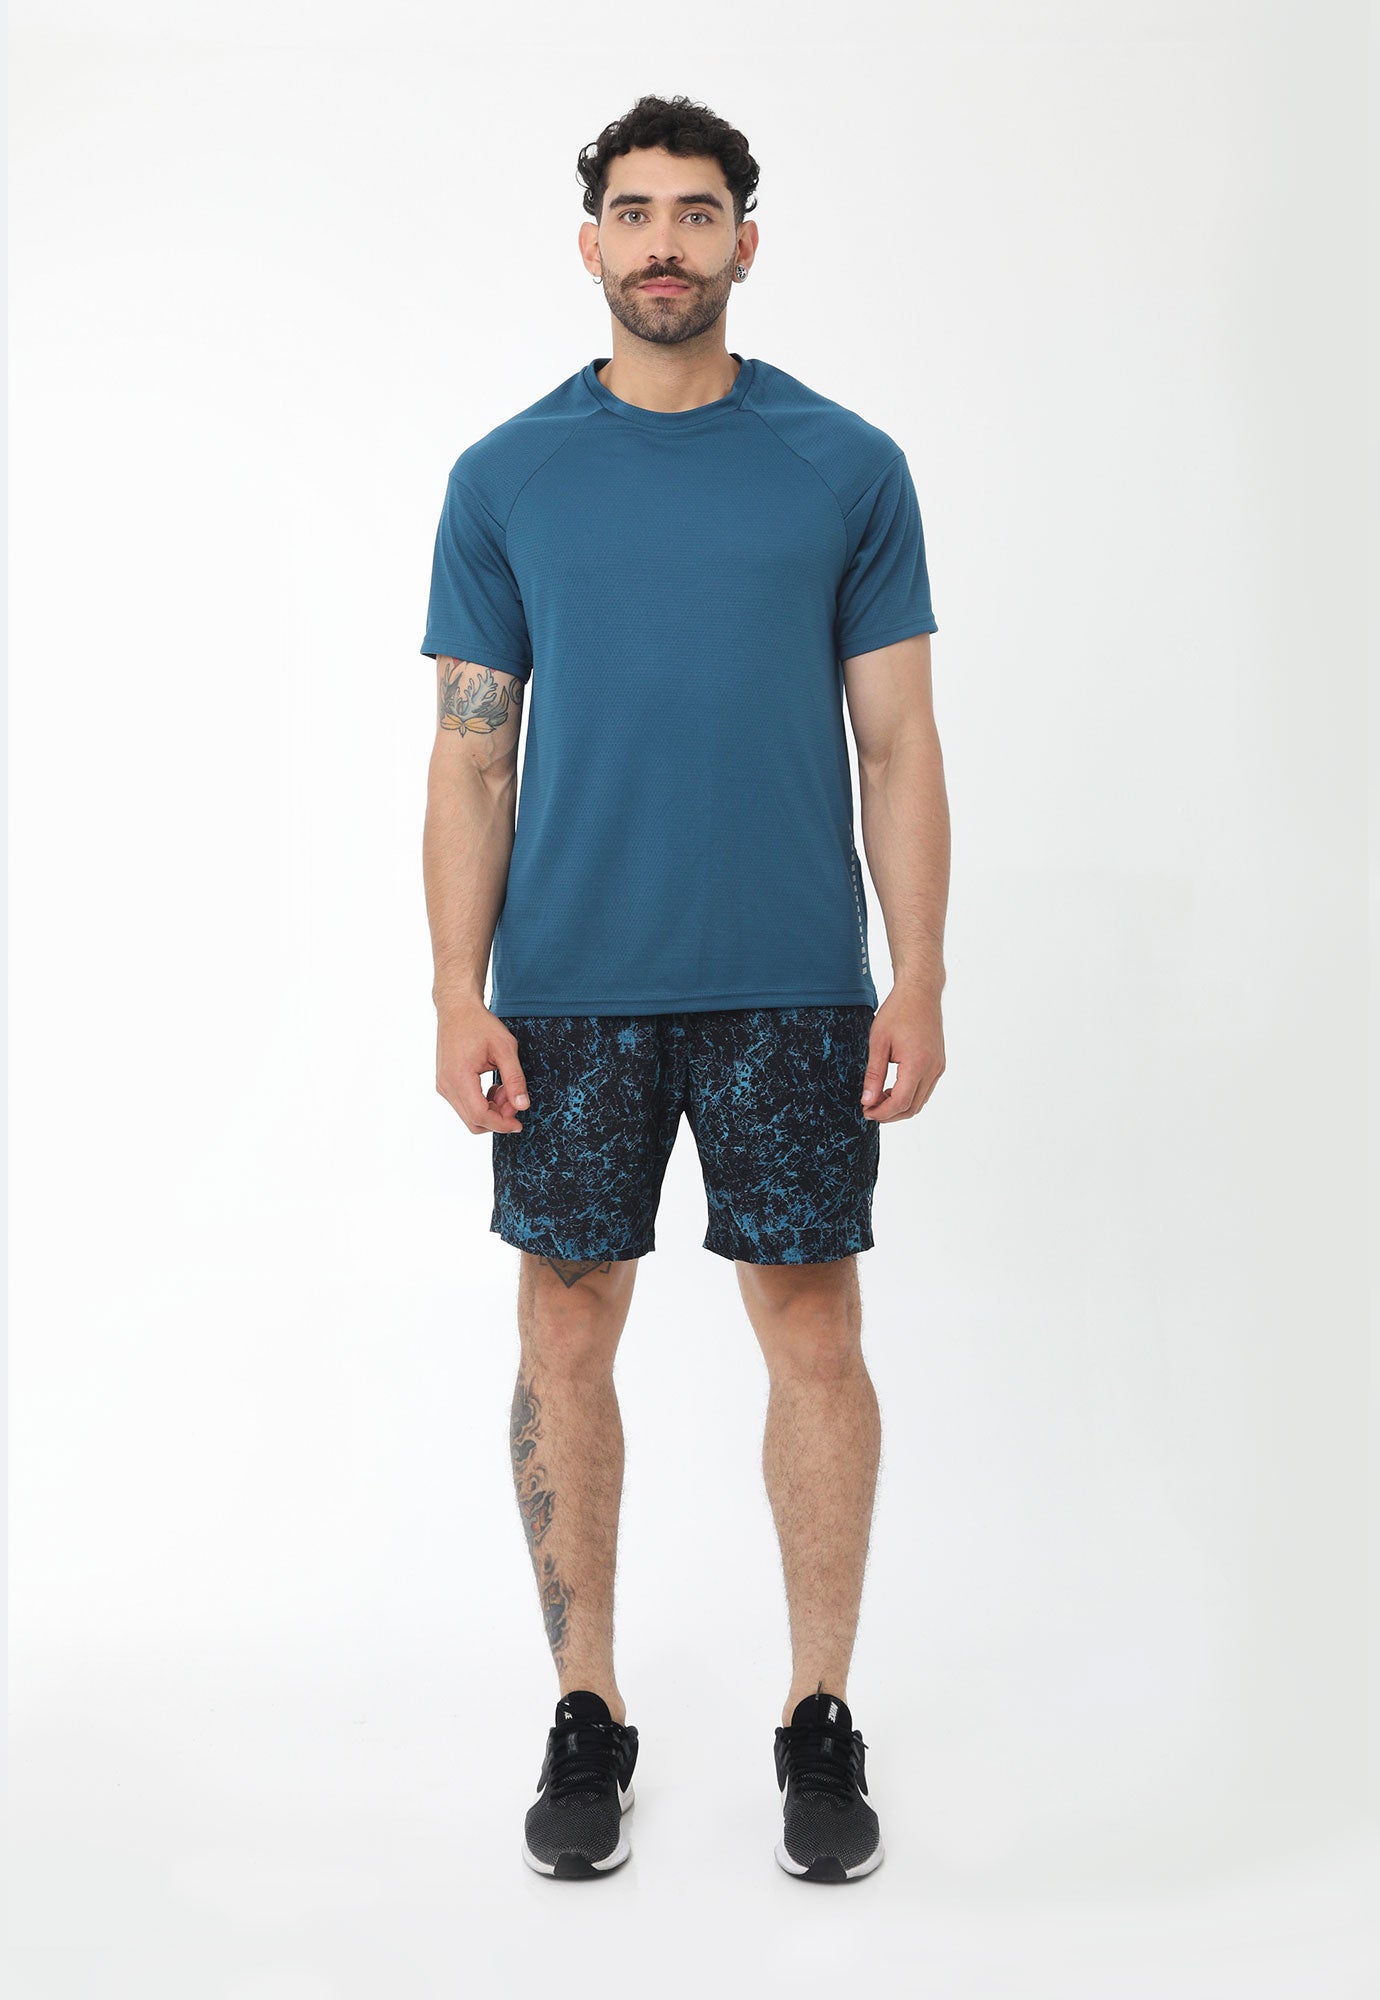 Pantaloneta deportiva azul sublimada, ciclista interno, tela impermeable y cordón ajustable para hombre